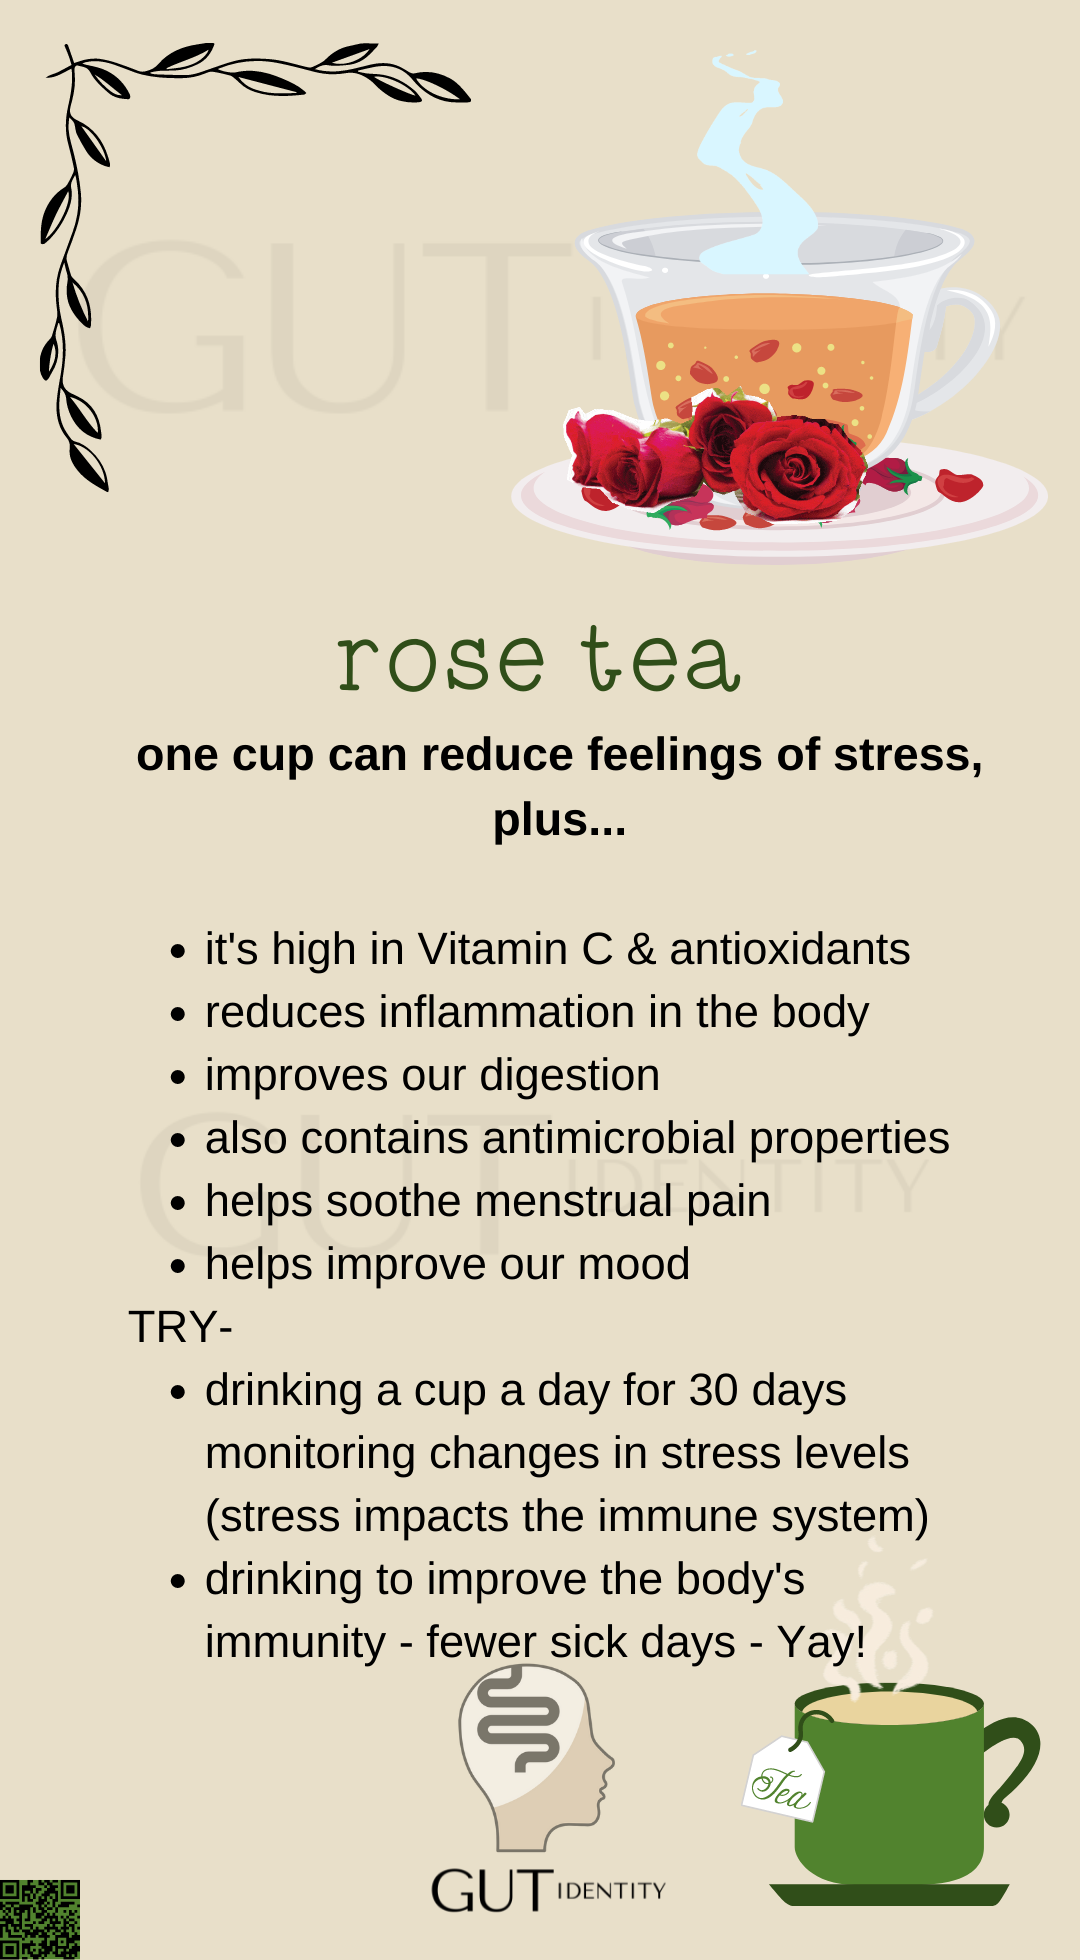 Rose tea to reduce feelings of stress by Gutidentity